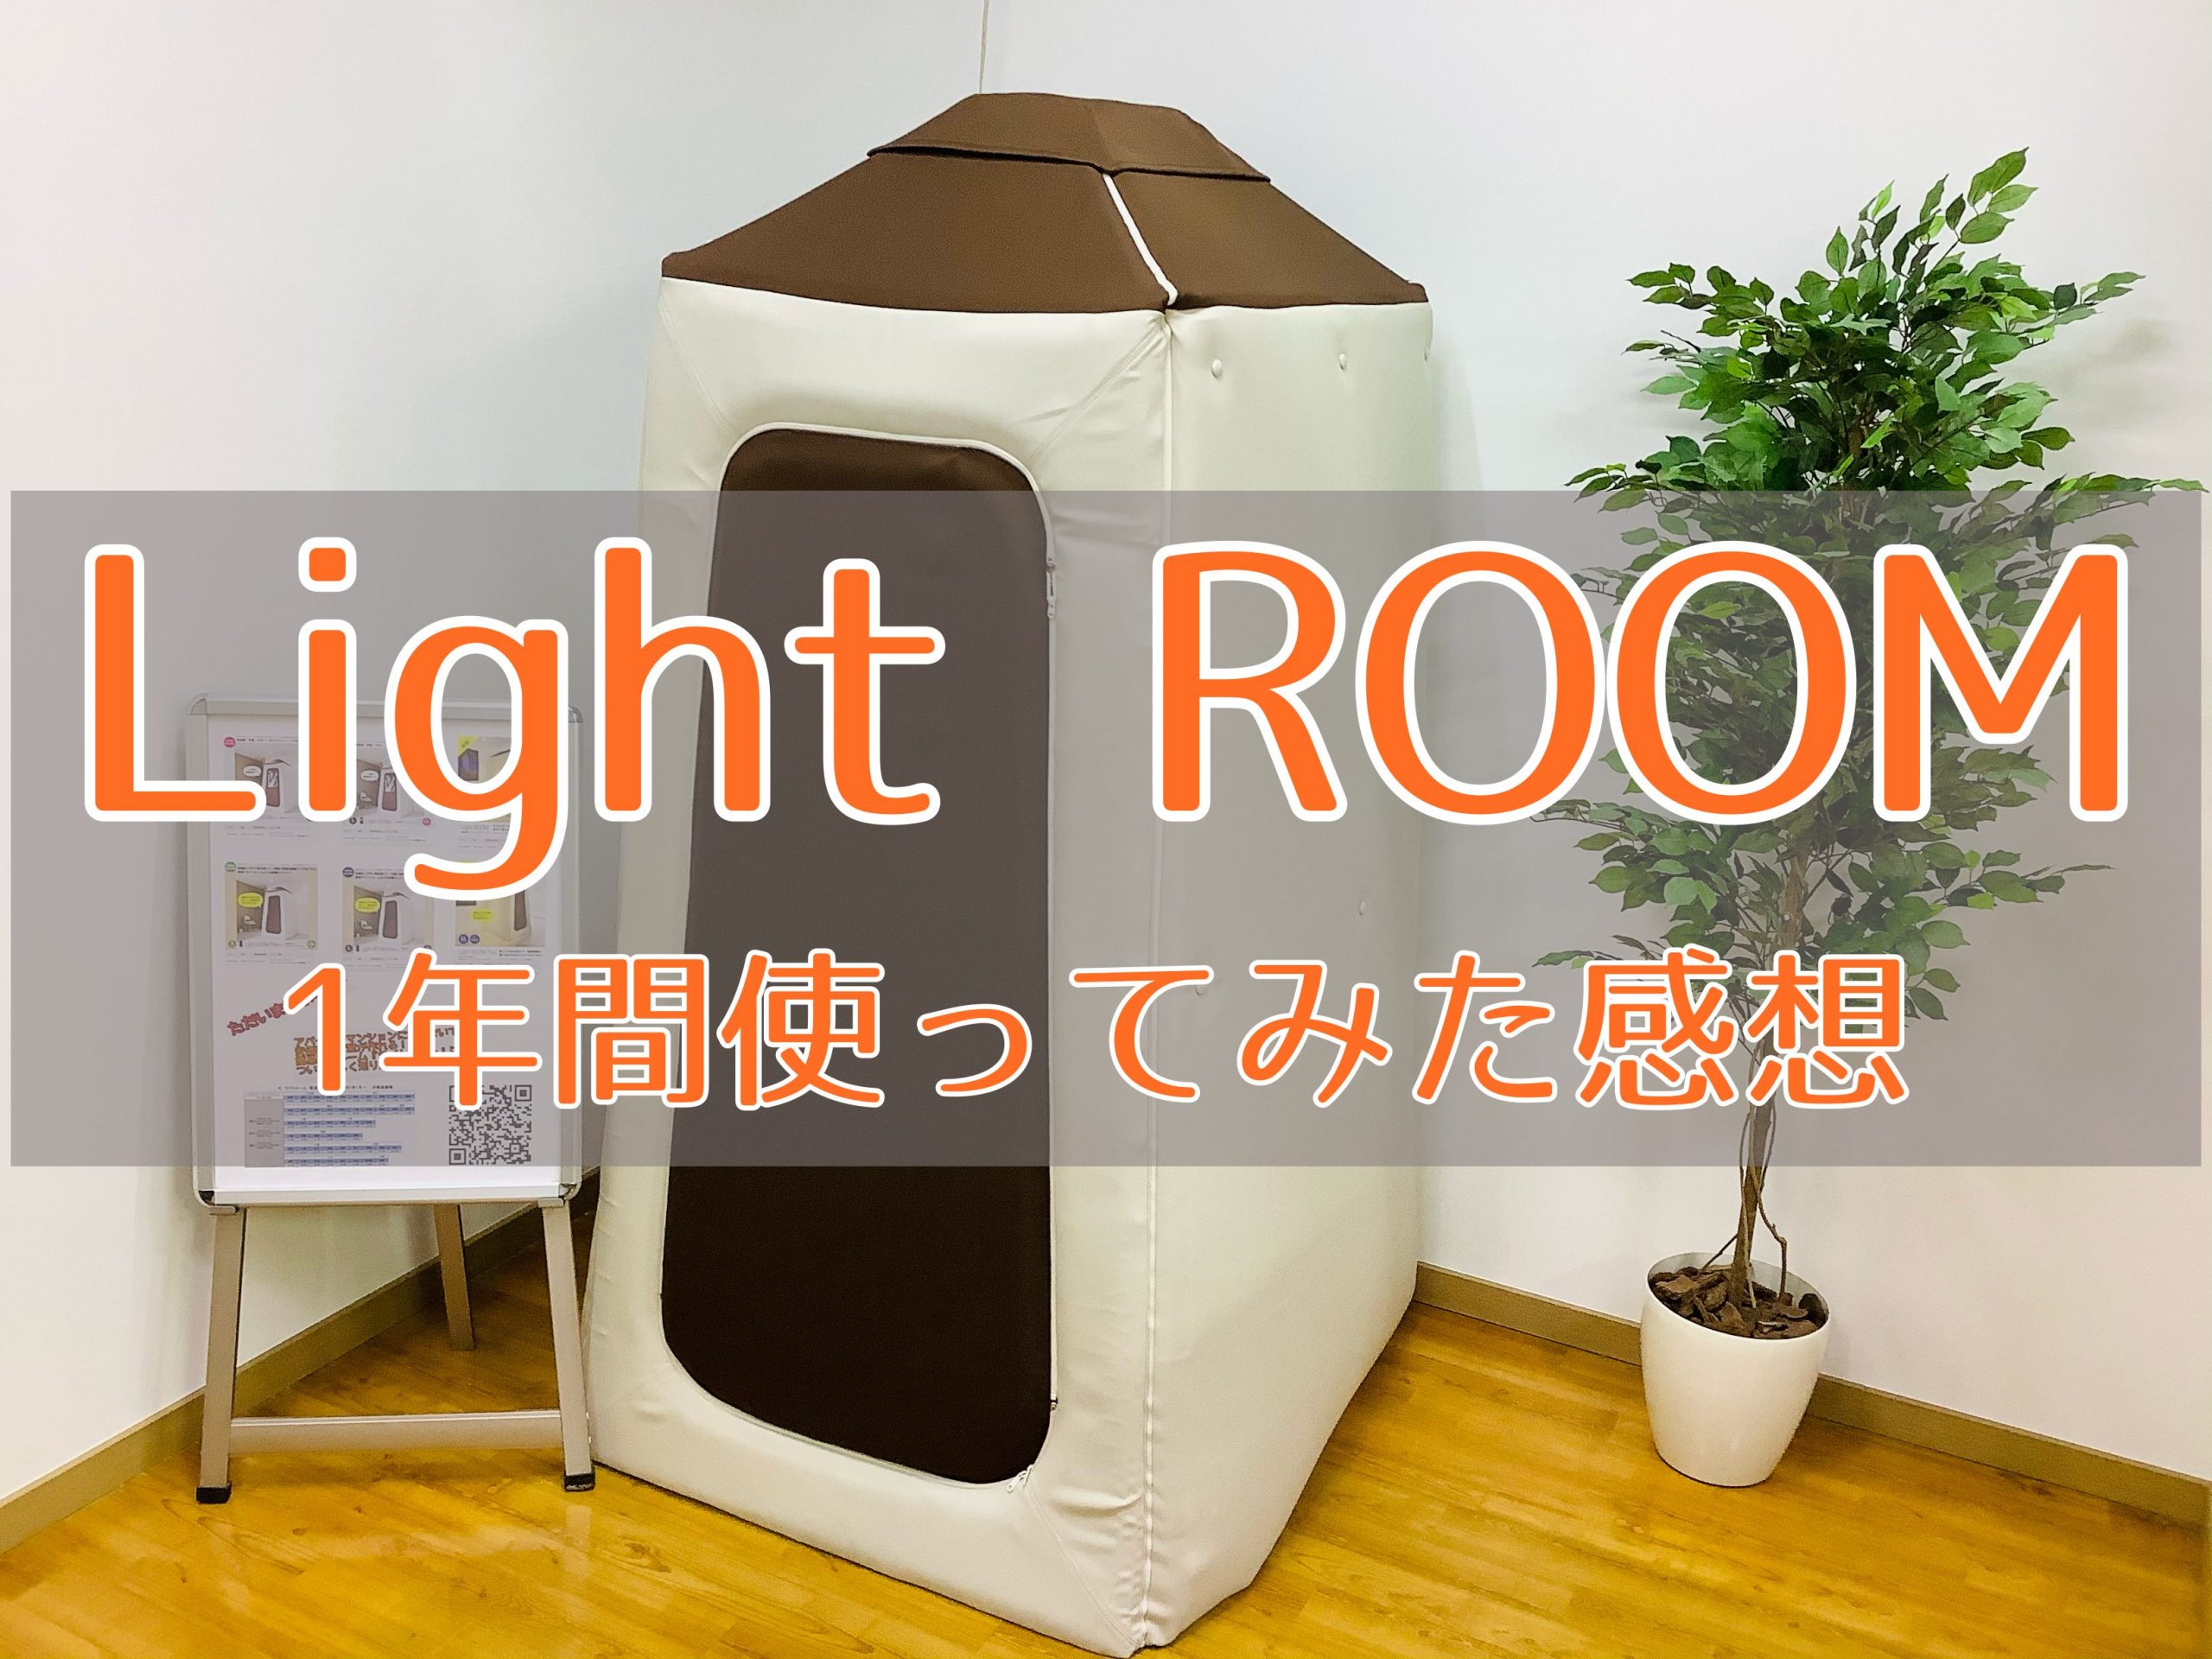 LightRoom ライトルームs 防音室-